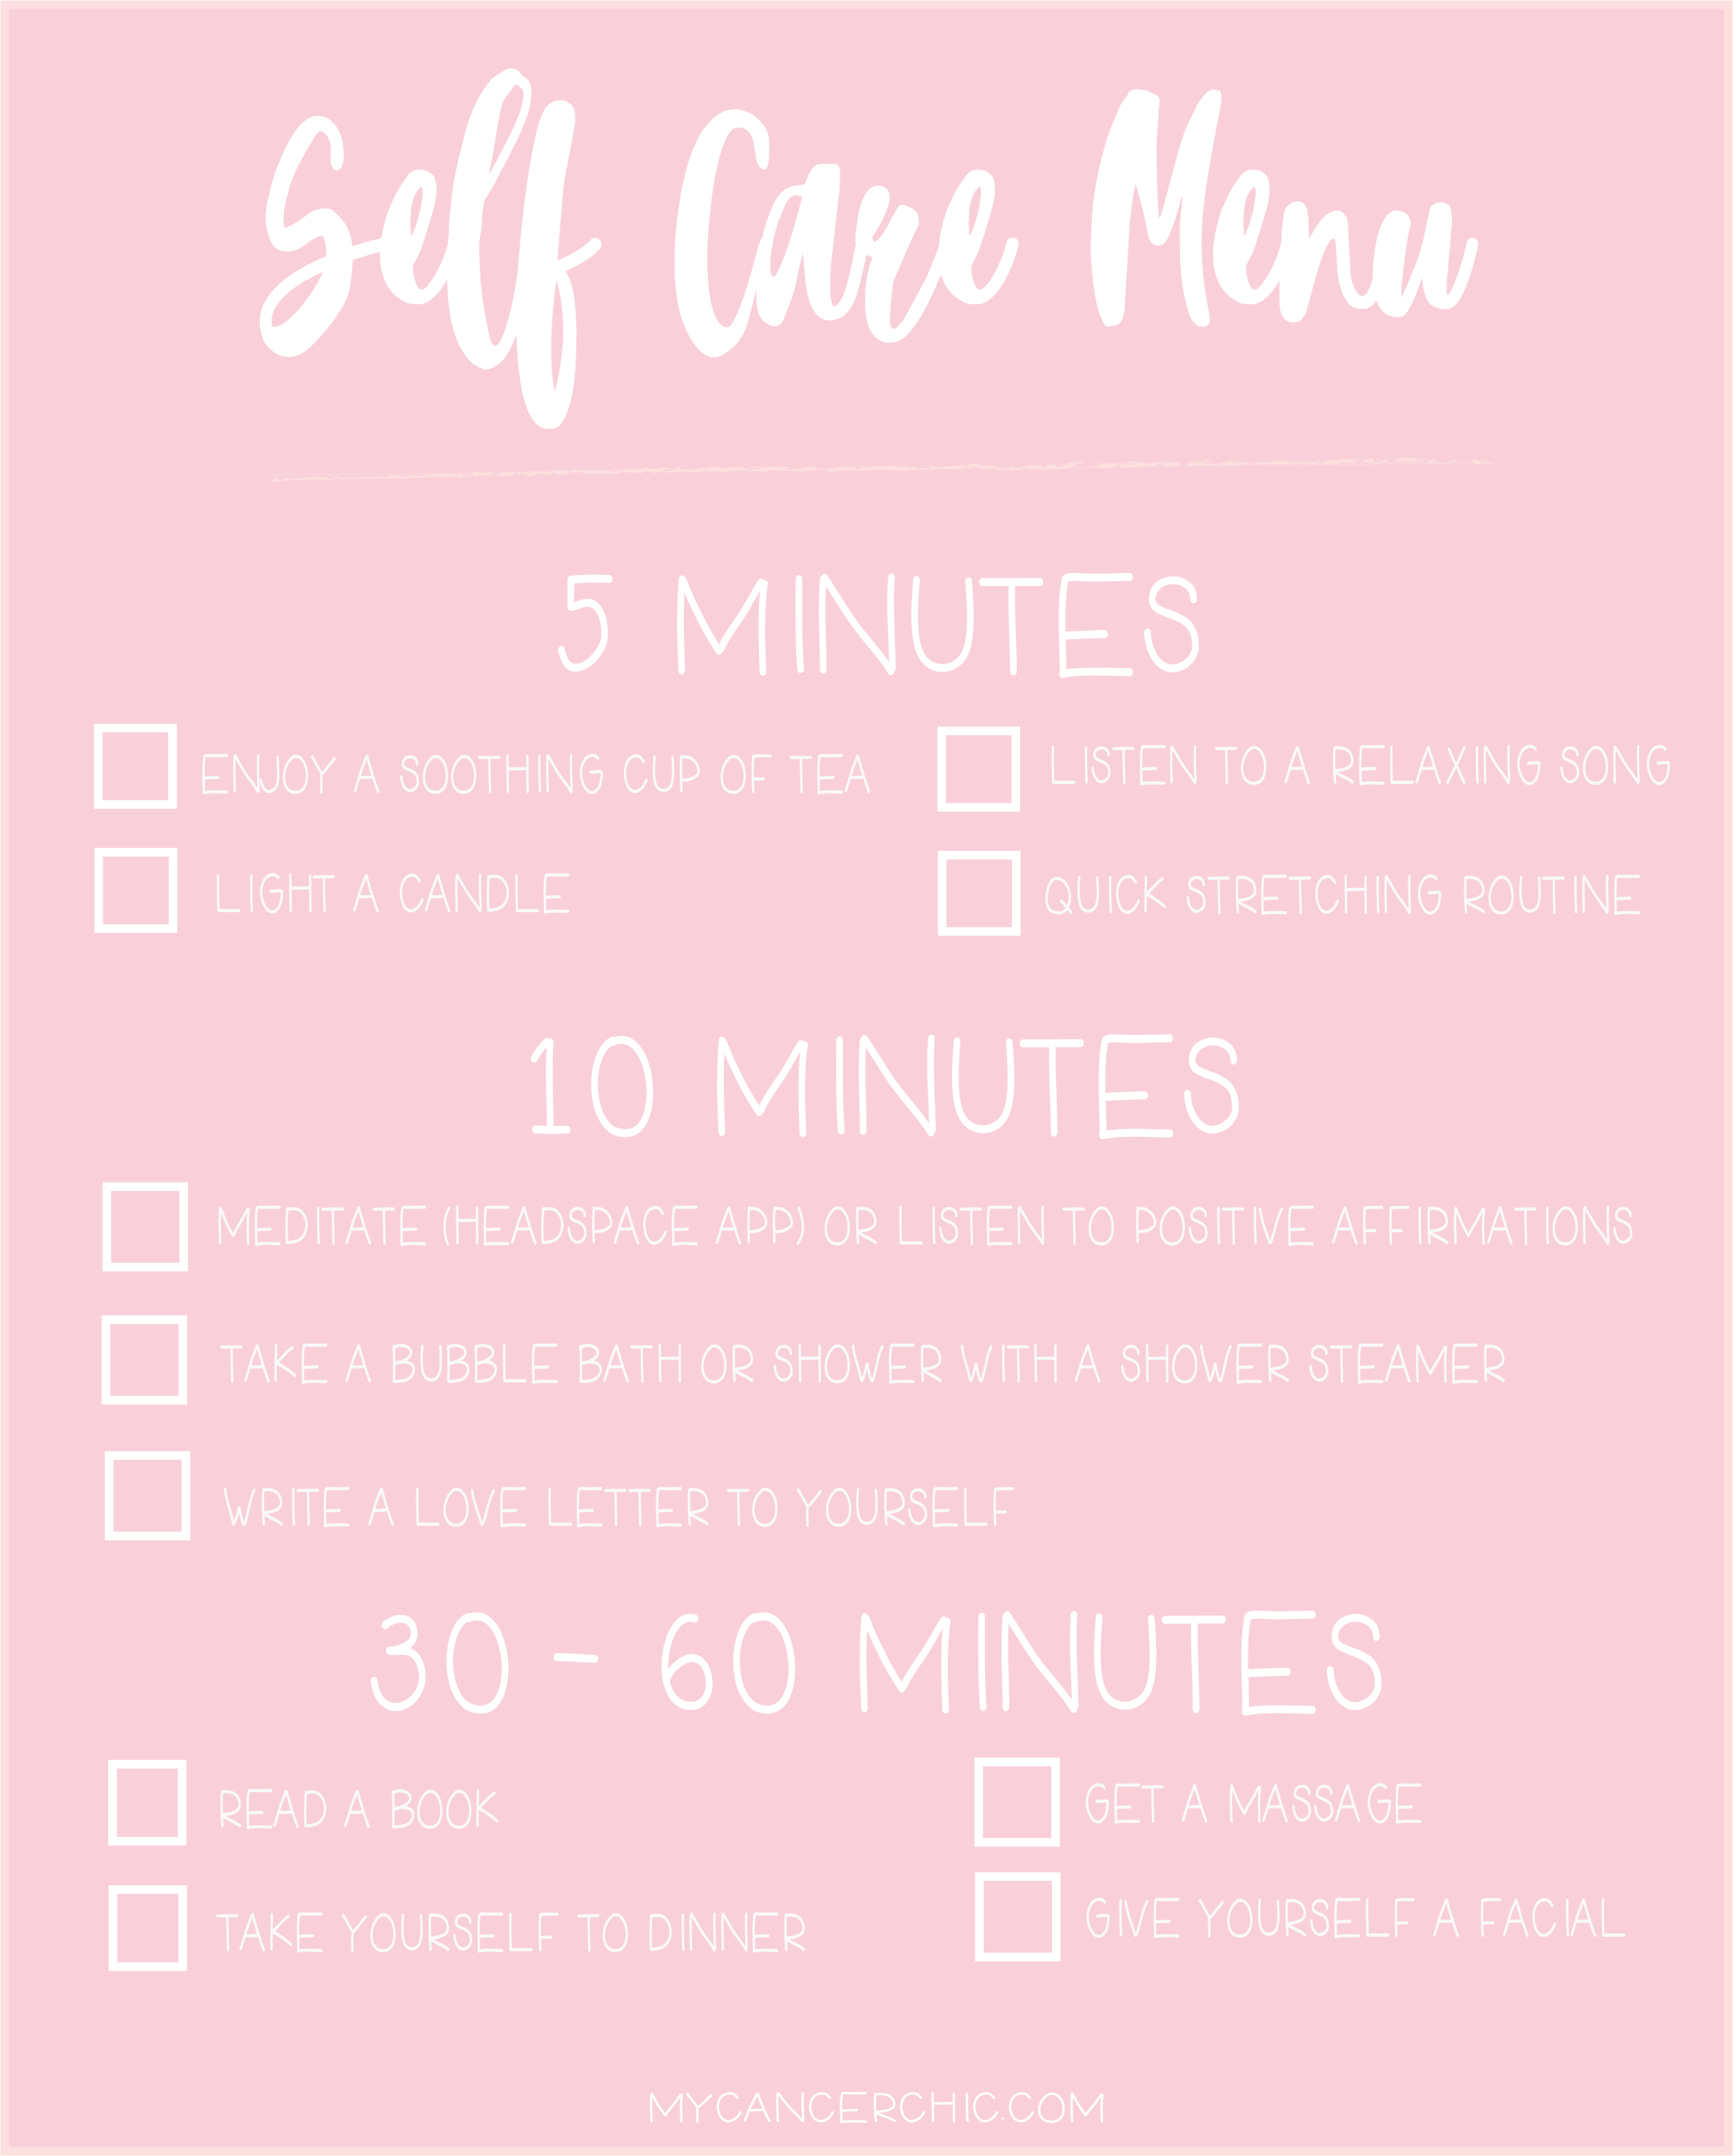 self-care habits self care menu